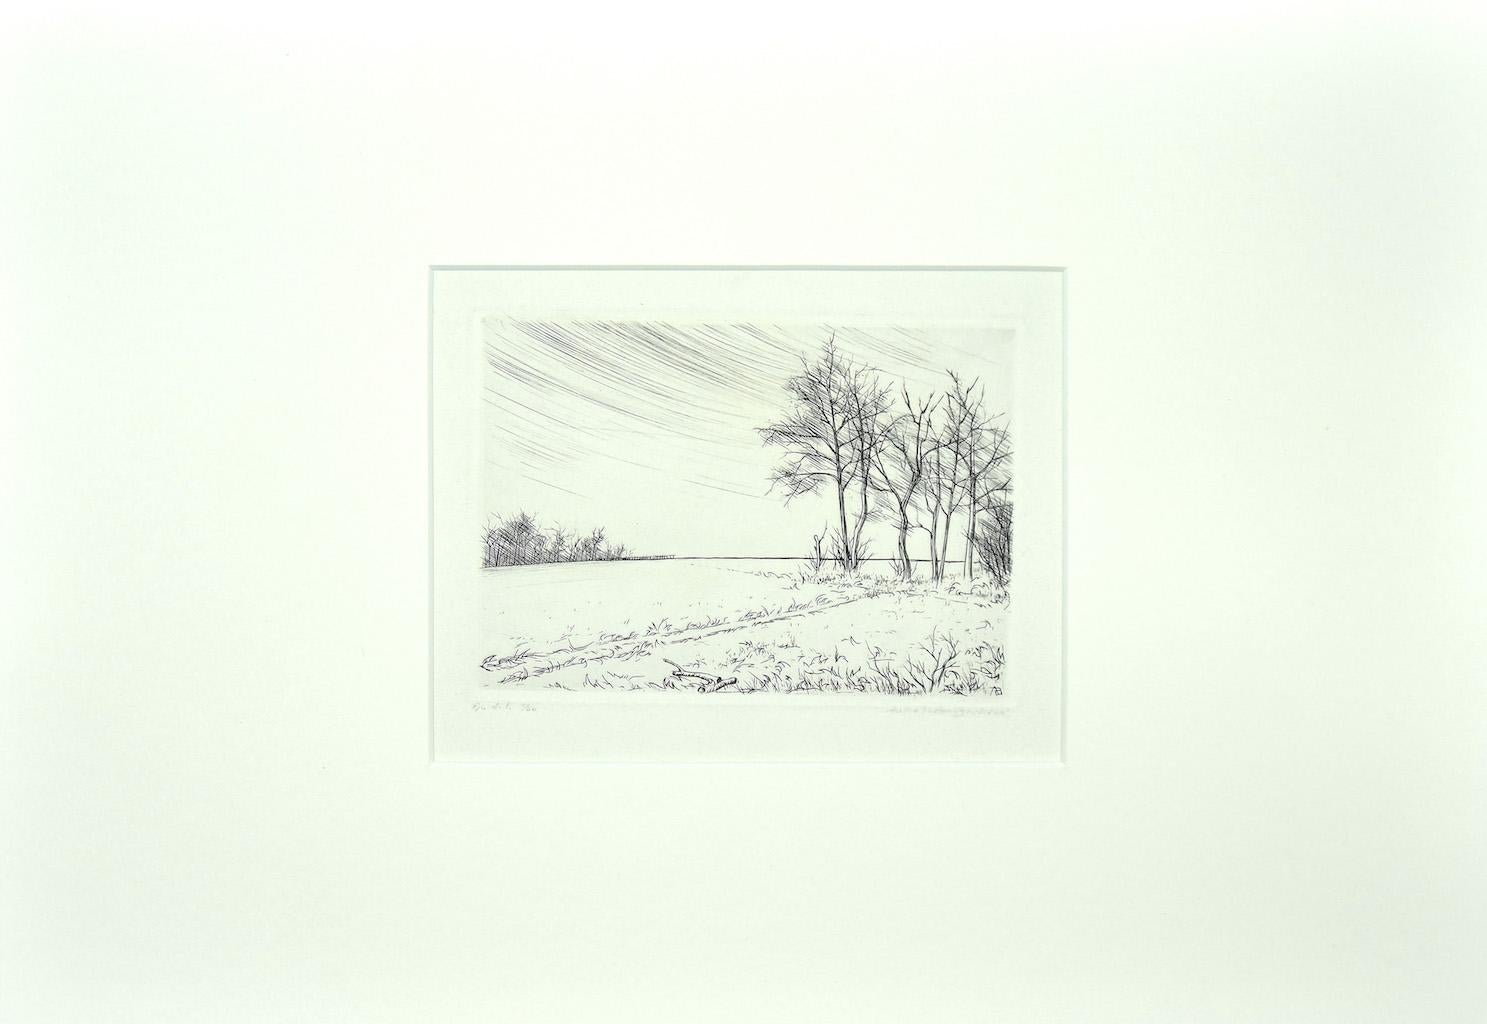 Landscape - Original Etching on Paper by Andre Roland Brudieux - 1970s - Print by André Roland Brudieux